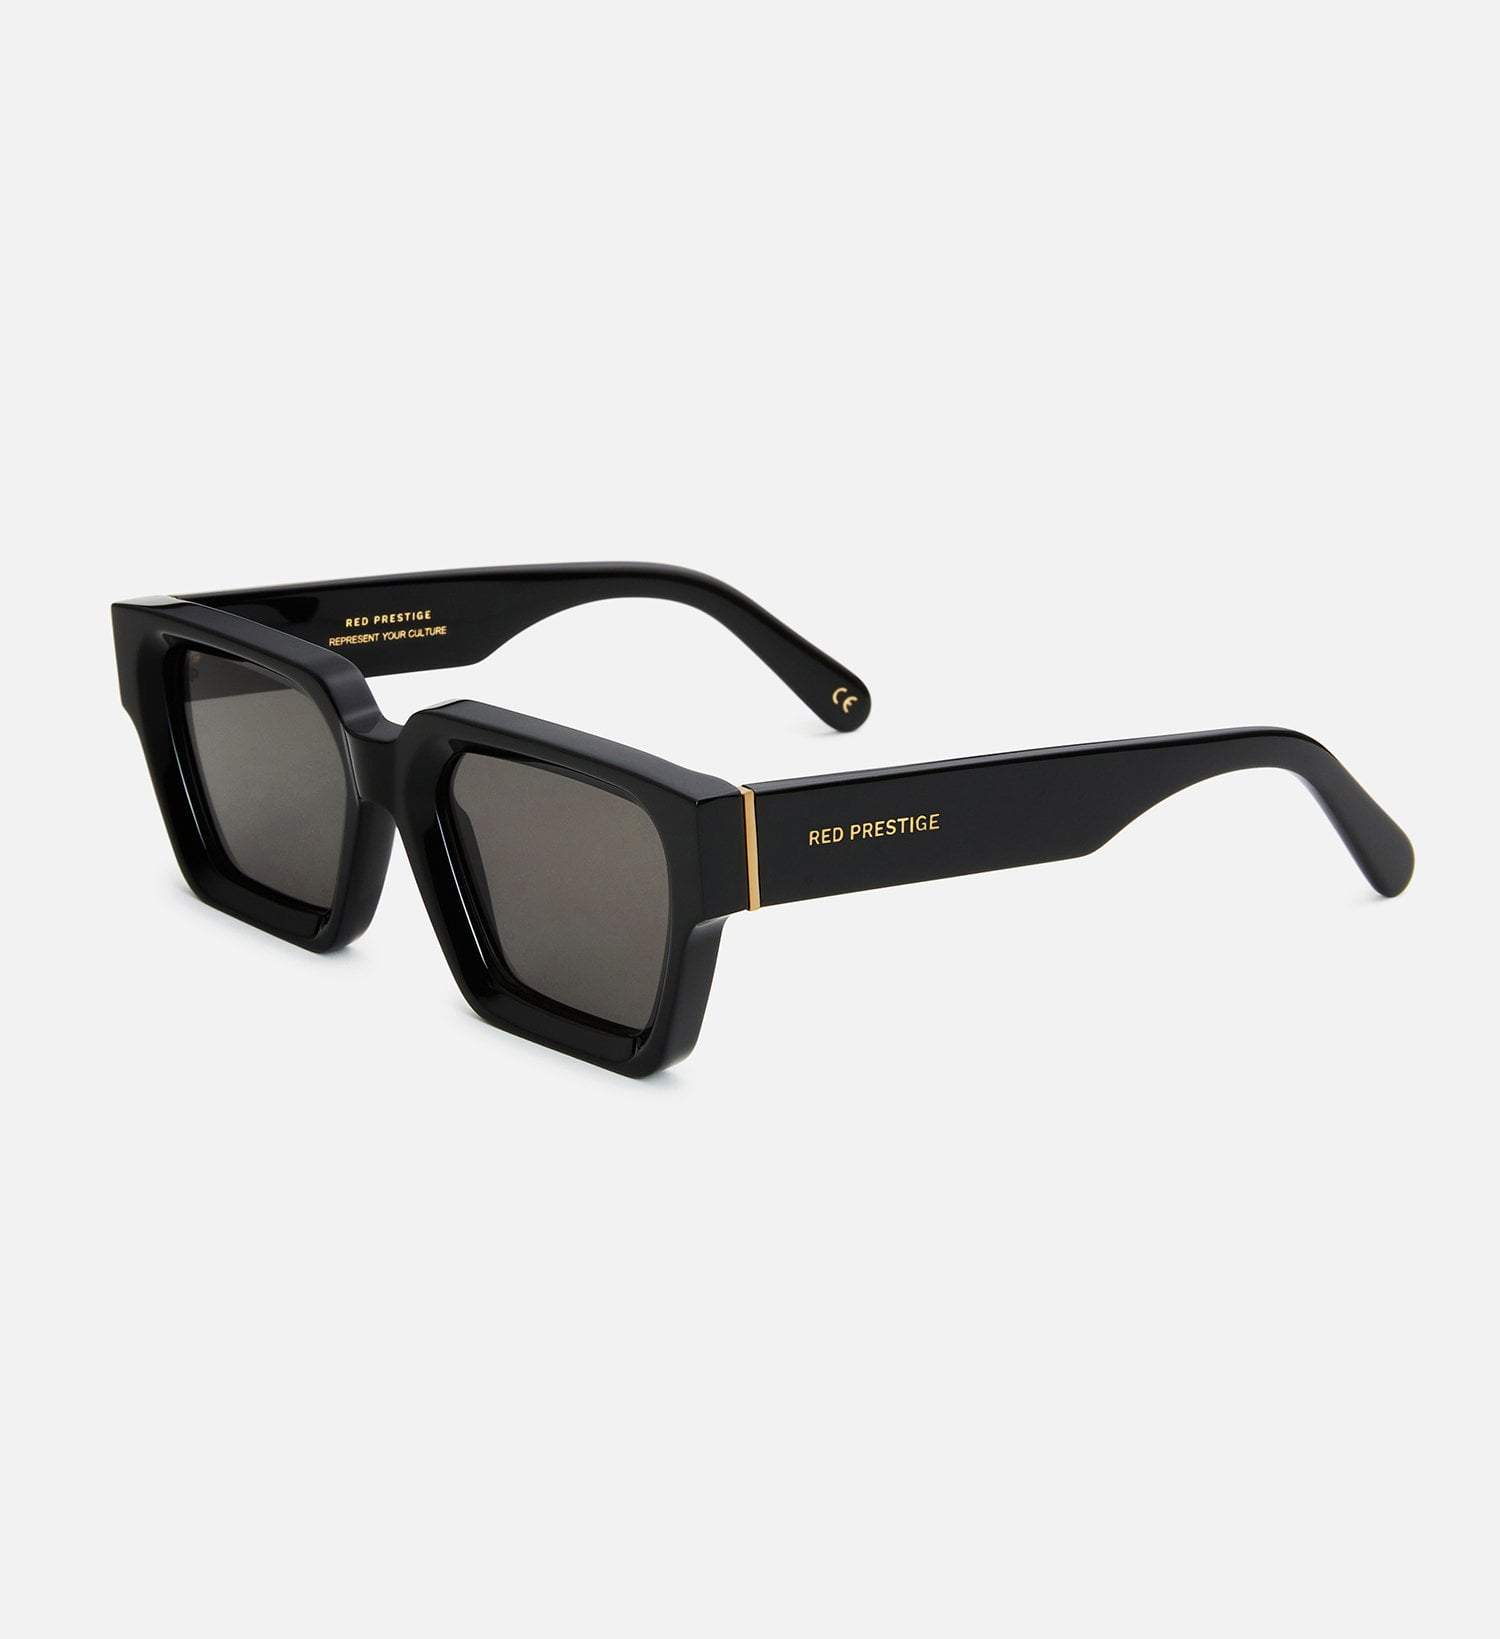 RED PRESTIGE® Grail Black Sunglasses